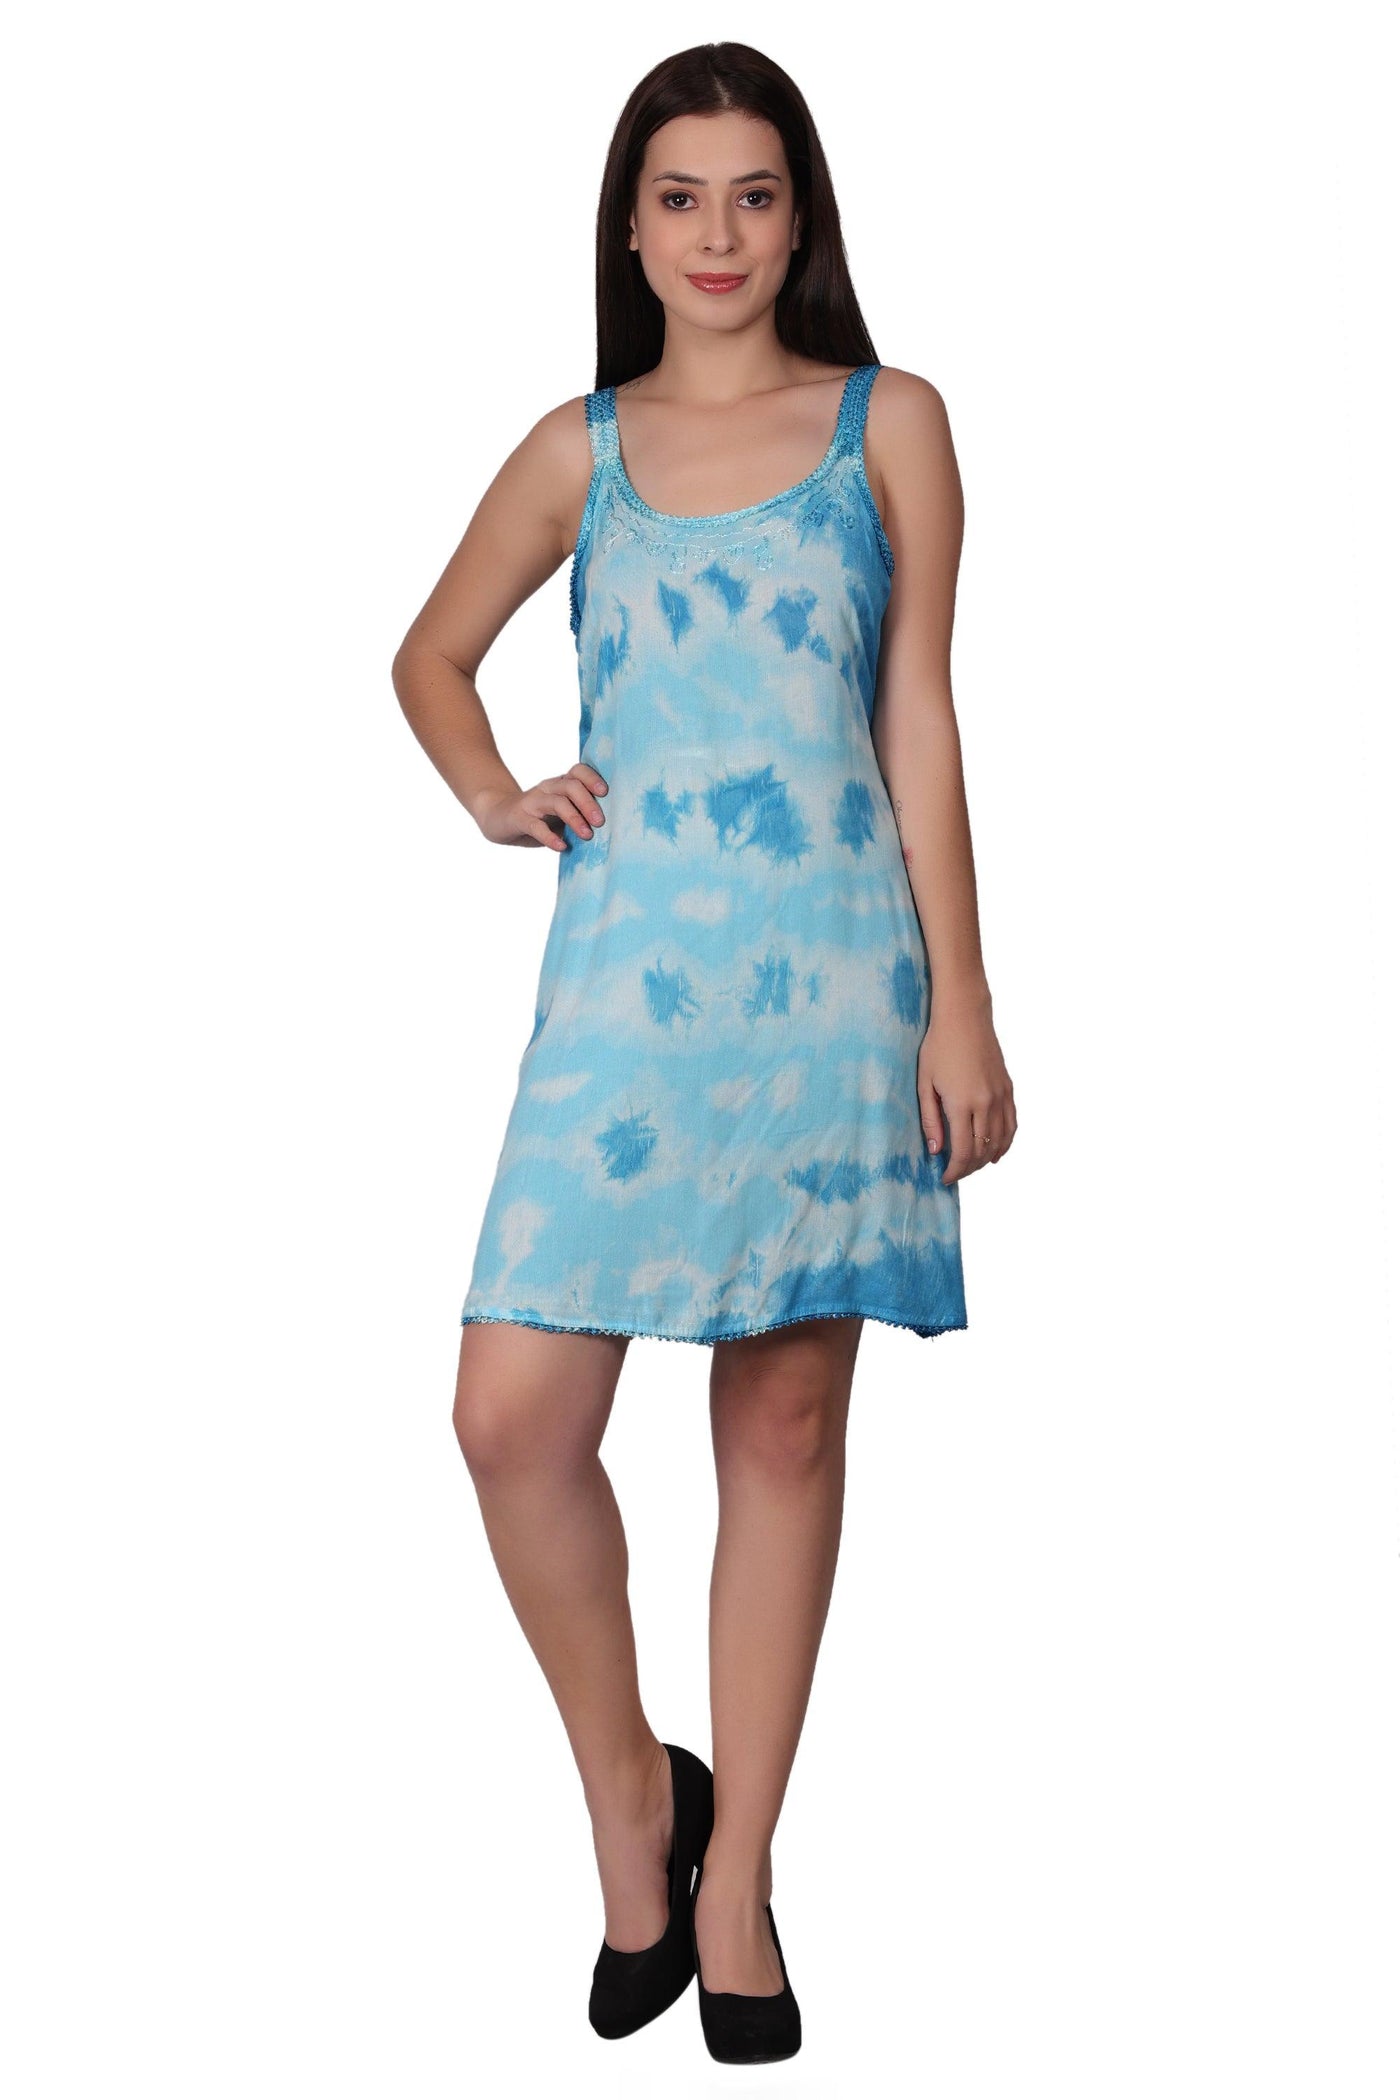 Laced Tie Dye Beach Dress 362213LACE  - Advance Apparels Inc